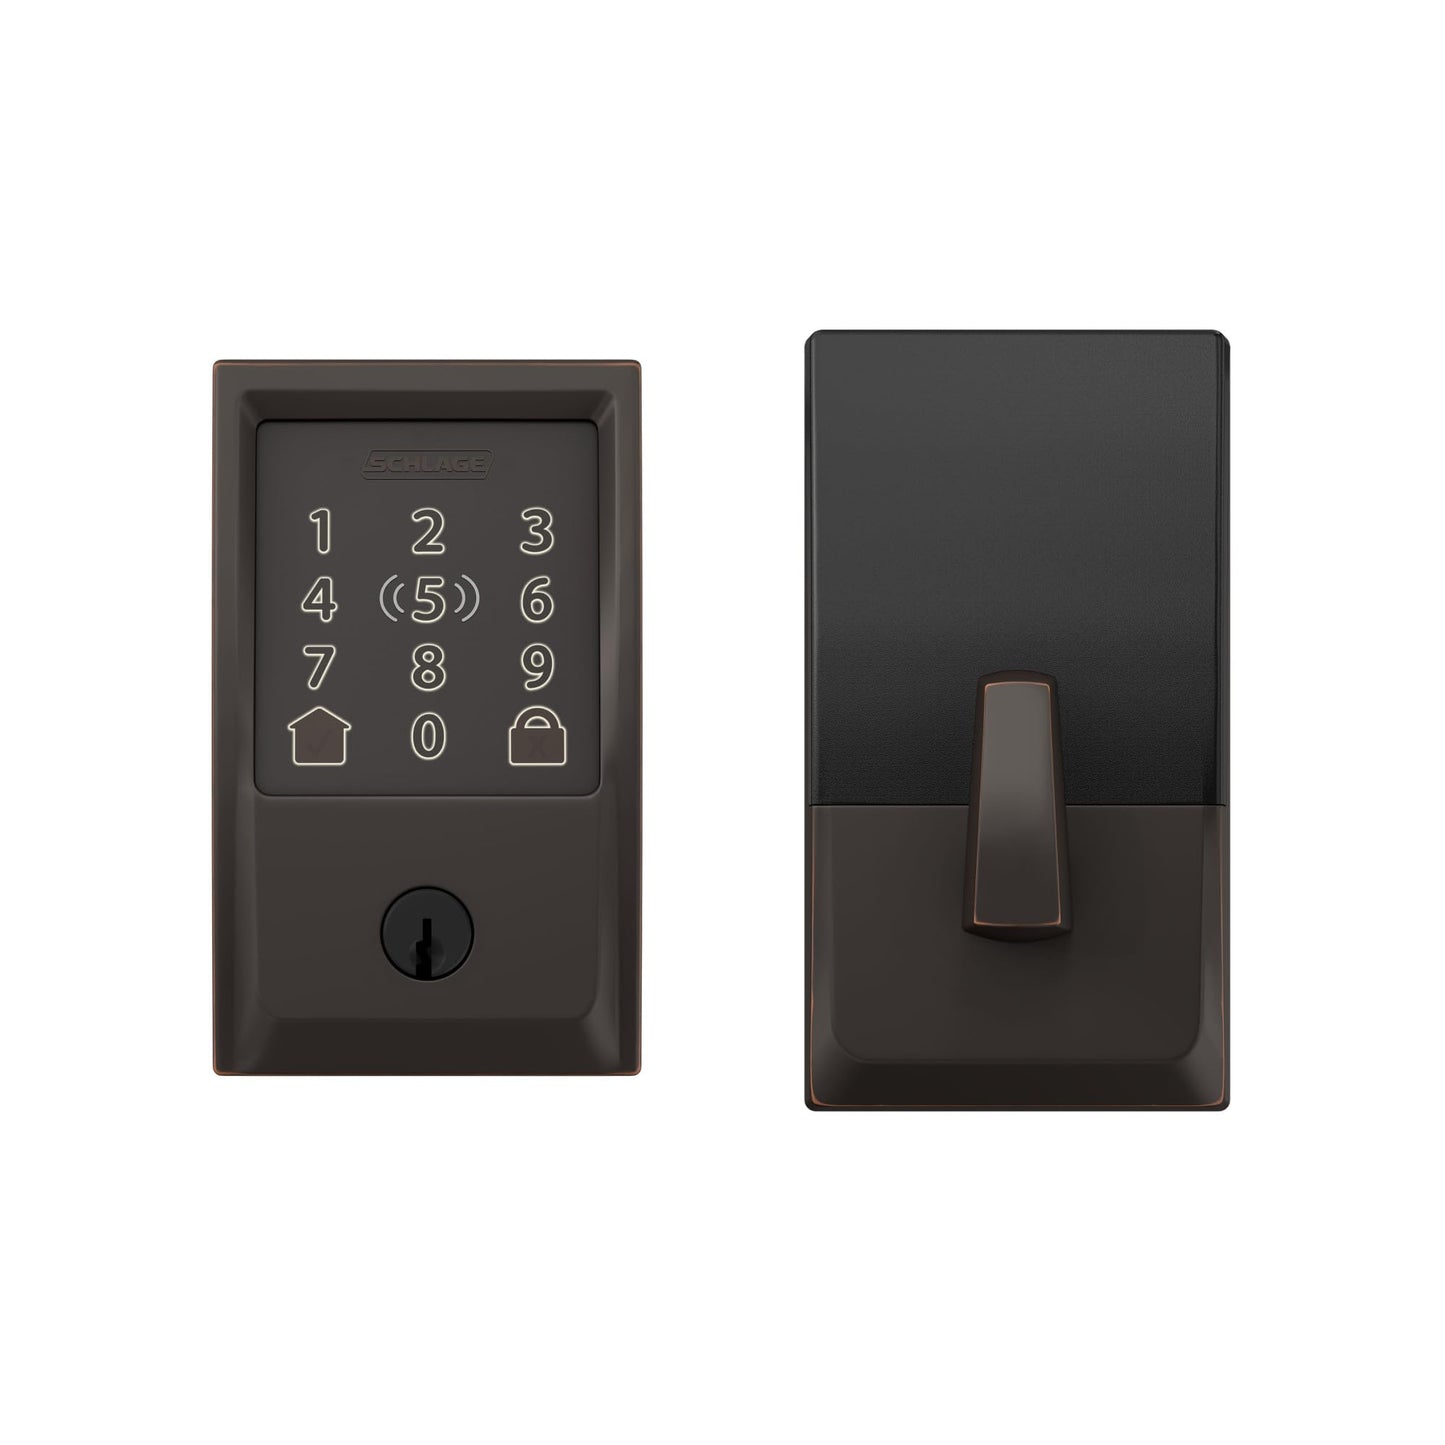 Schlage BE499WBCEN716 Encode Plus Century WiFi Deadbolt Smart Keyless Entry Touchscreen Door Lock, Aged Bronze